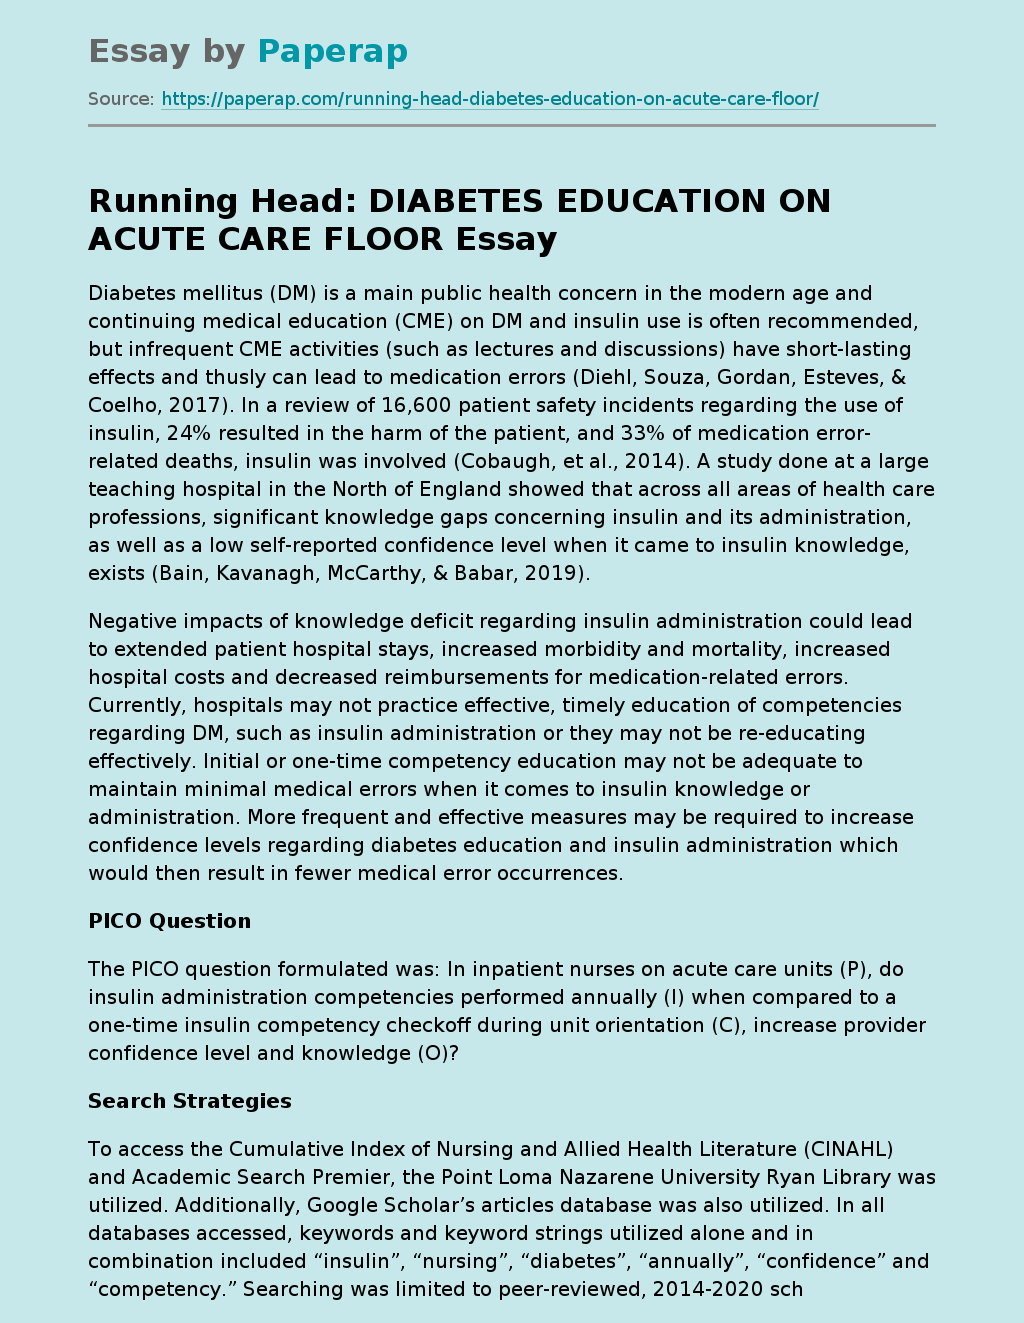 Running Head: DIABETES EDUCATION ON ACUTE CARE FLOOR